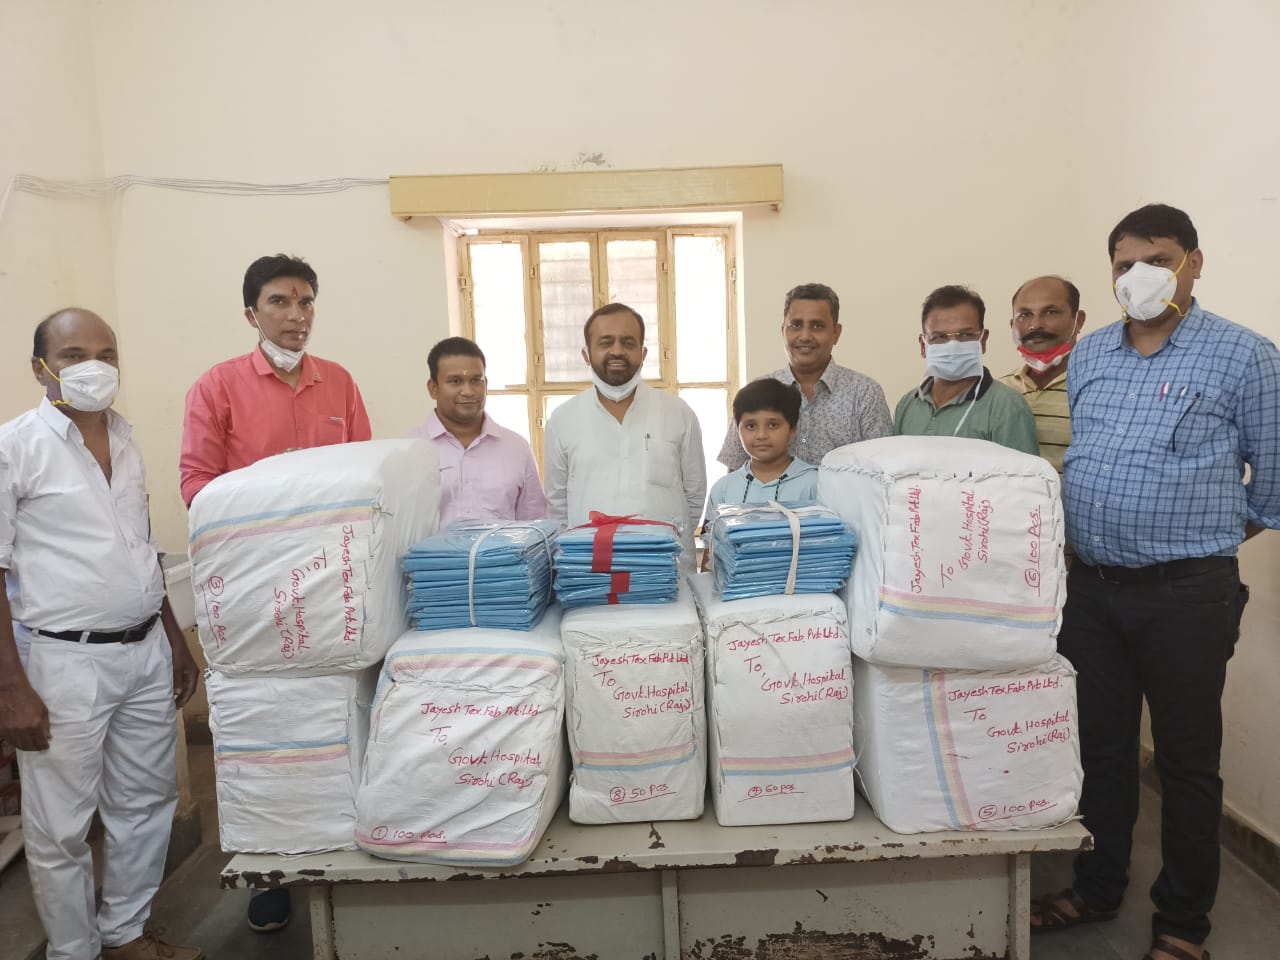 सिरोही जिला चिकित्सालय को भामाशाह ललीत प्रजापत निवासी माण्डवा द्वारा 1.20 लाख मूल्य की 600 बेडशीट भेंट, विधायक संयम लोढा ने जताया आभार